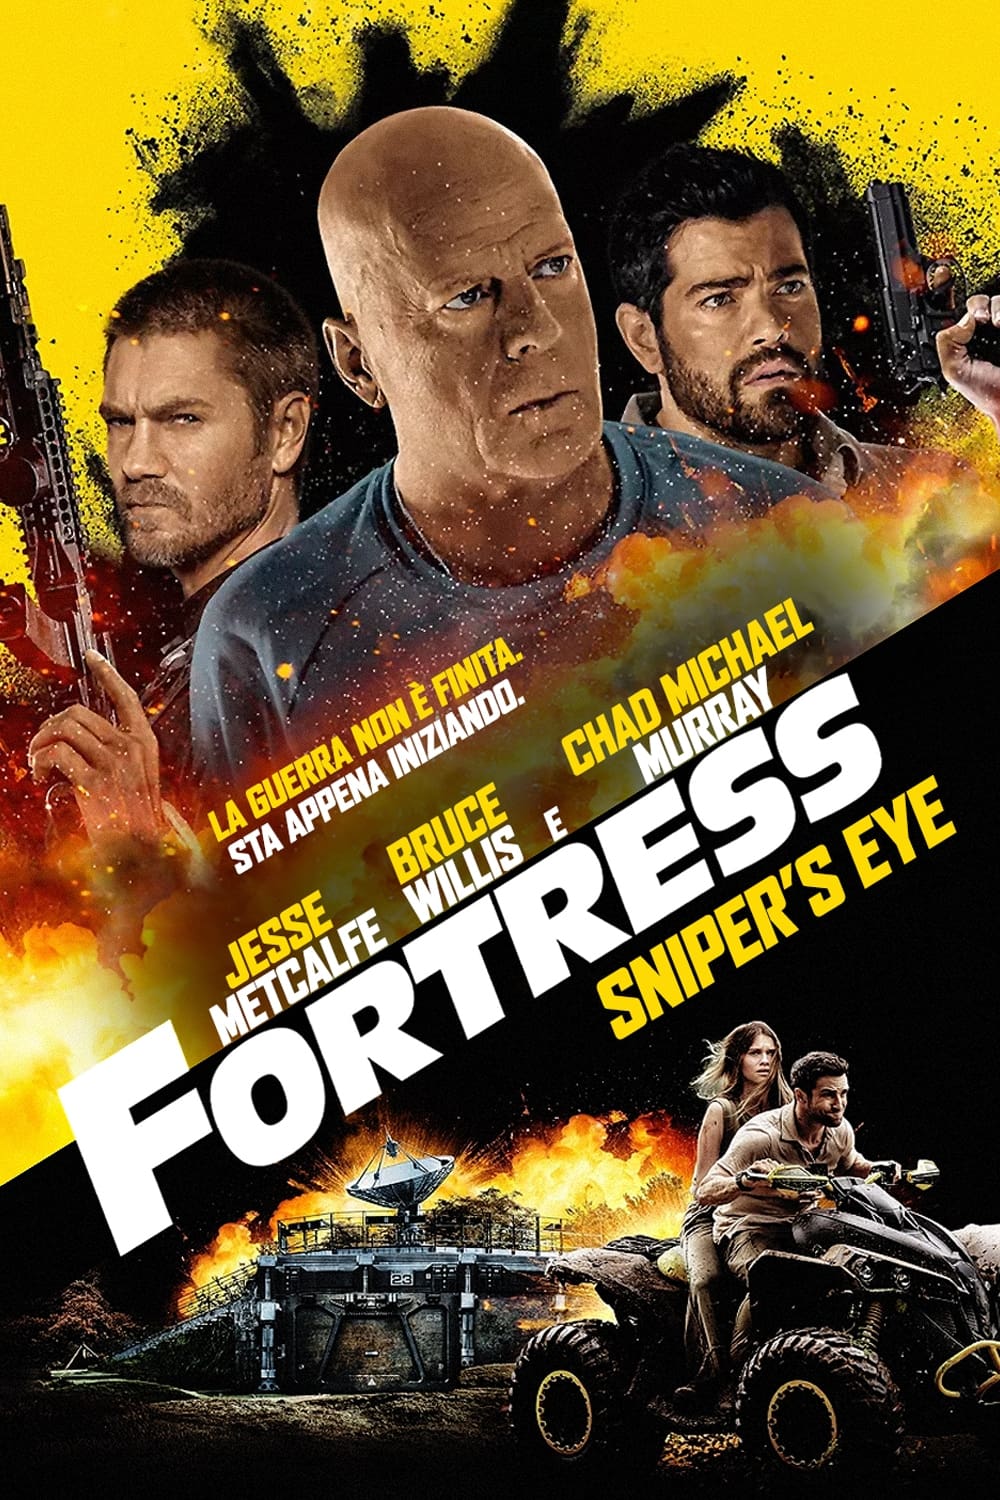 Fortress: Sniper's Eye film